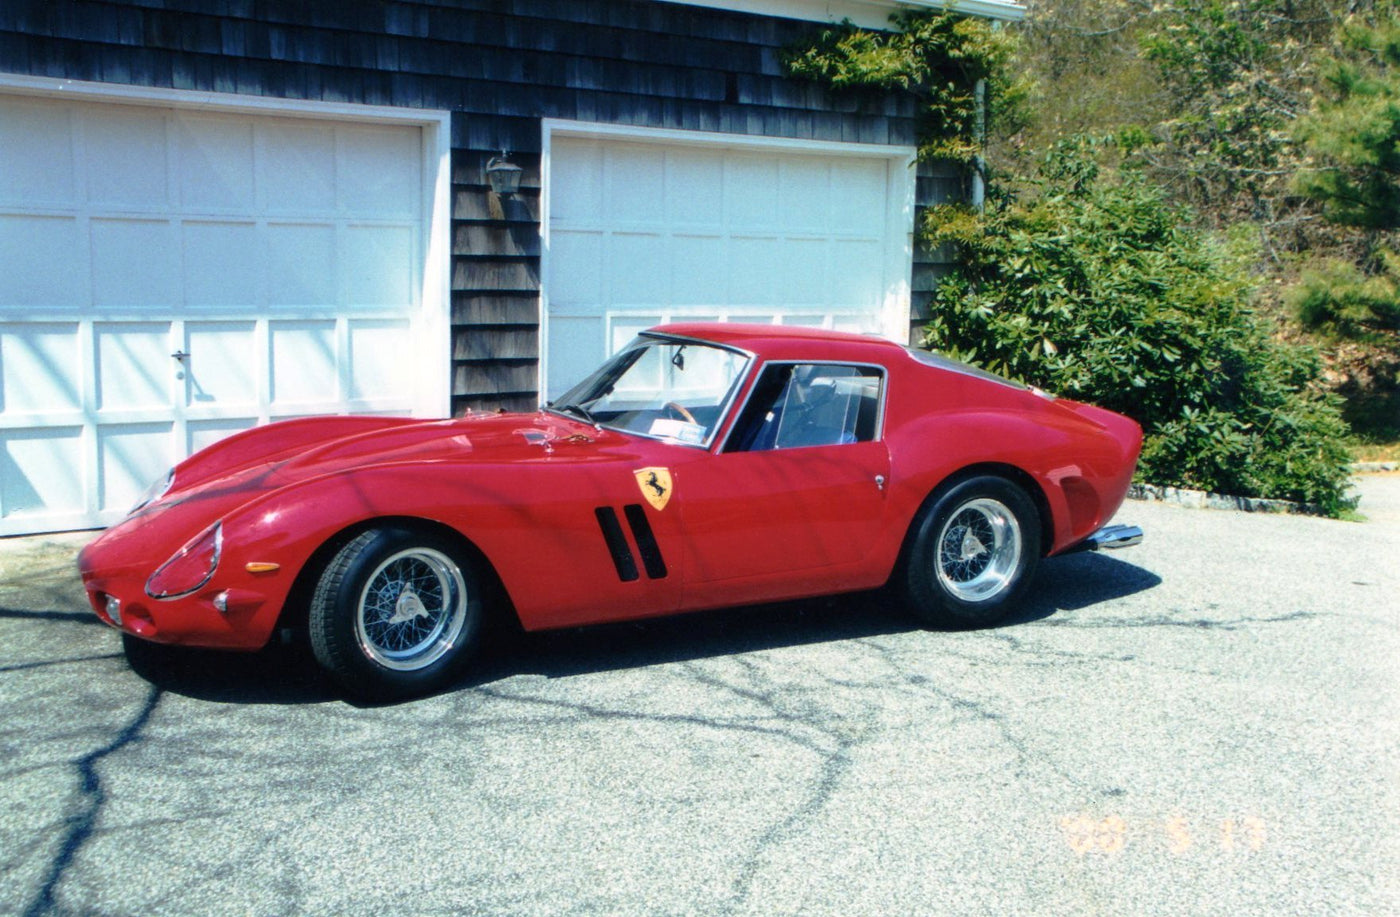 This Filmmaker Acquired A Ferrari 250 GTO In 1968